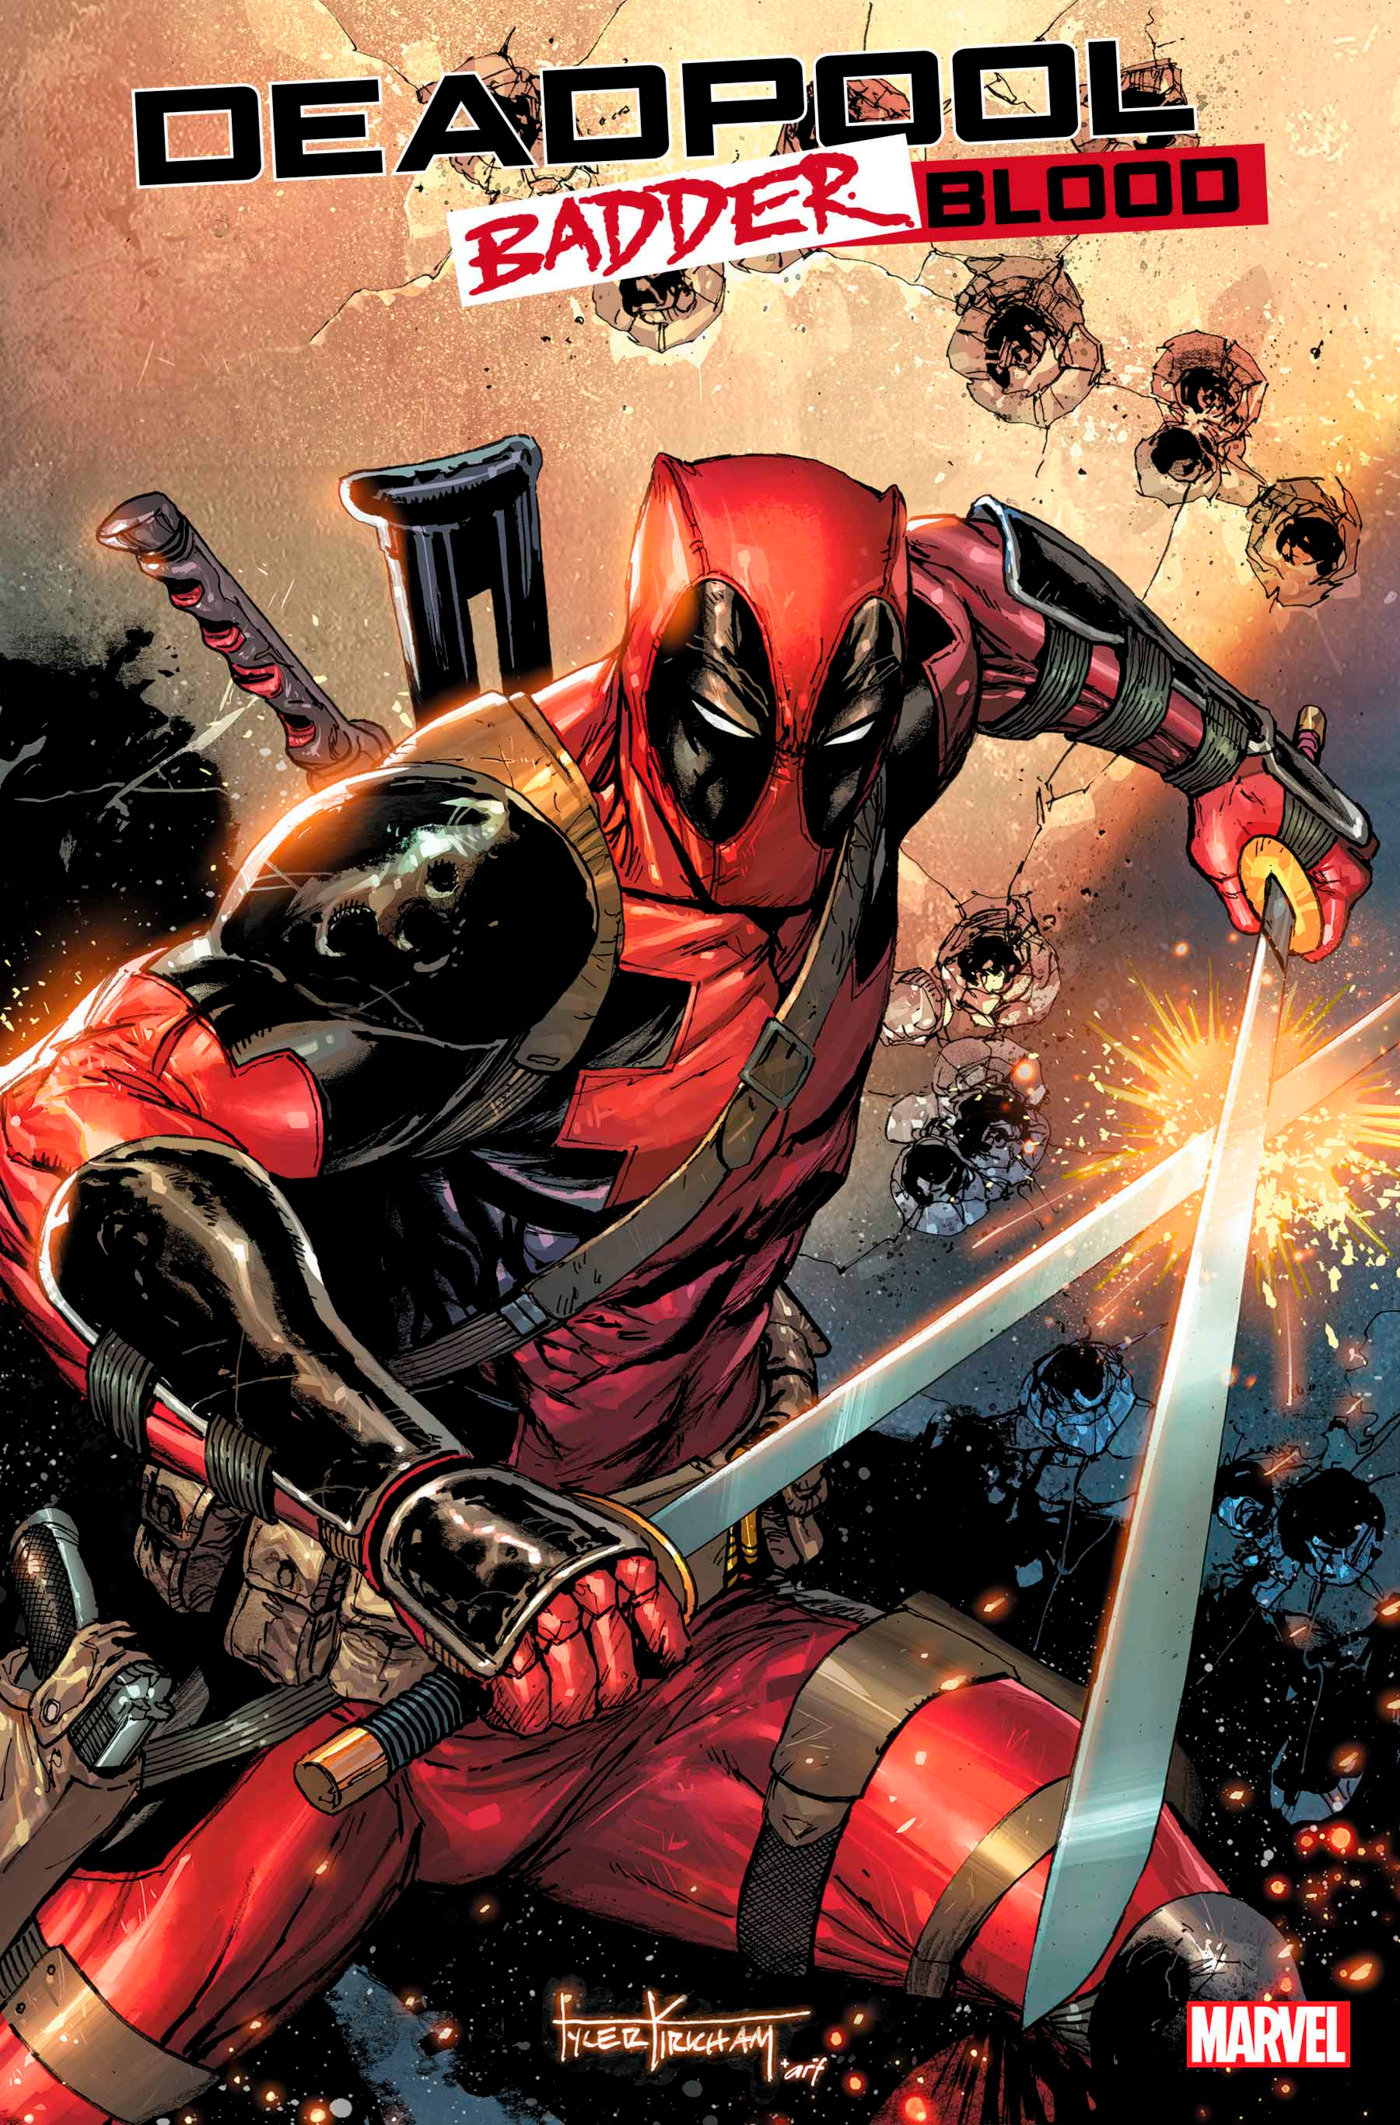 Deadpool: Badder Blood #2 Tyler Kirkham 1 for 25 Incentive Variant